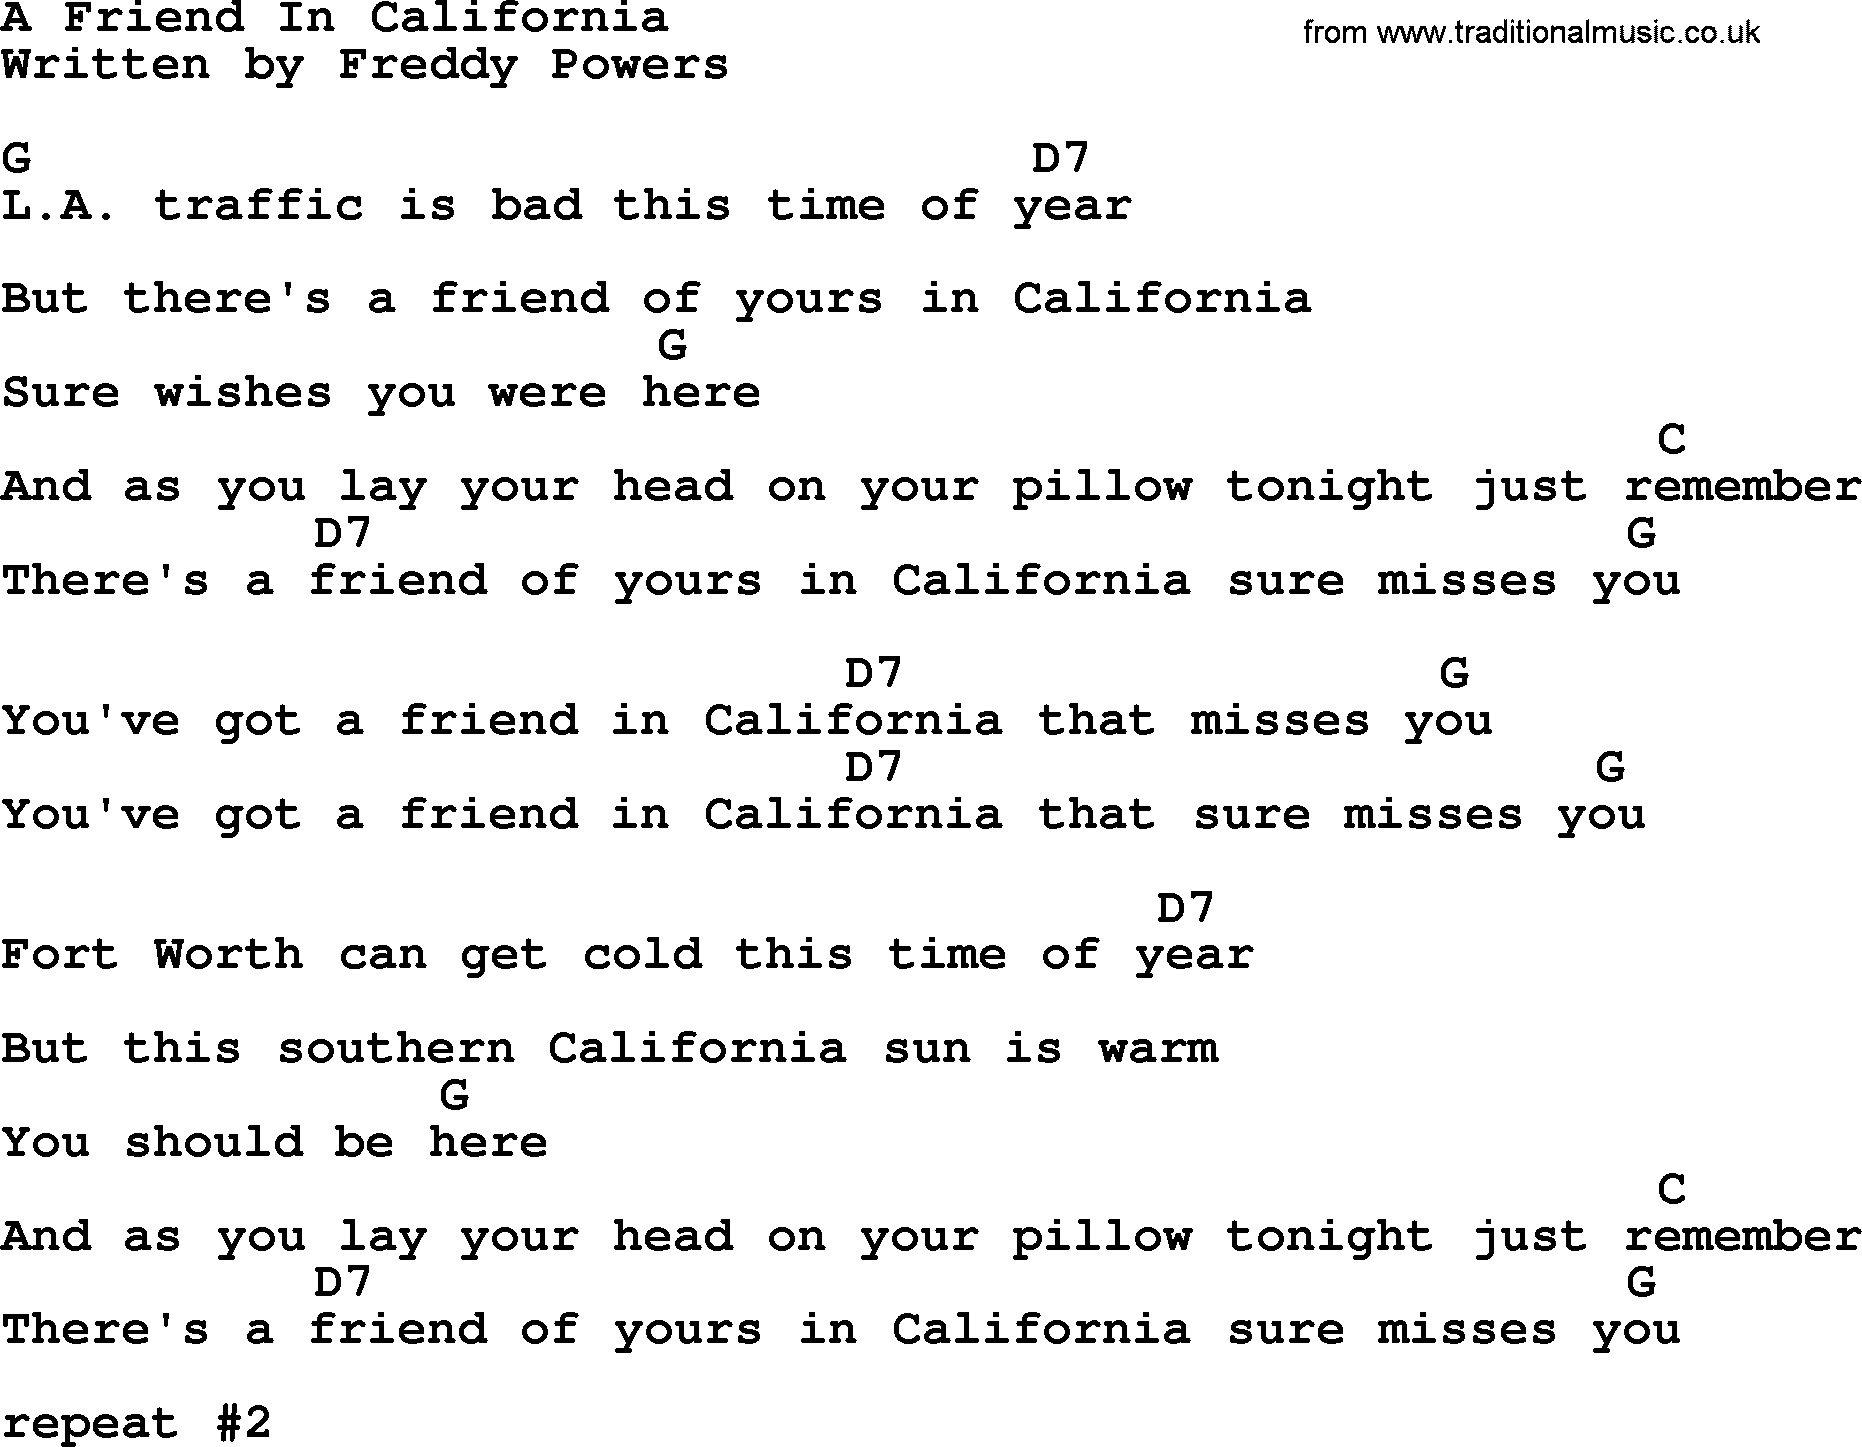 Merle Haggard song: A Friend In California, lyrics and chords